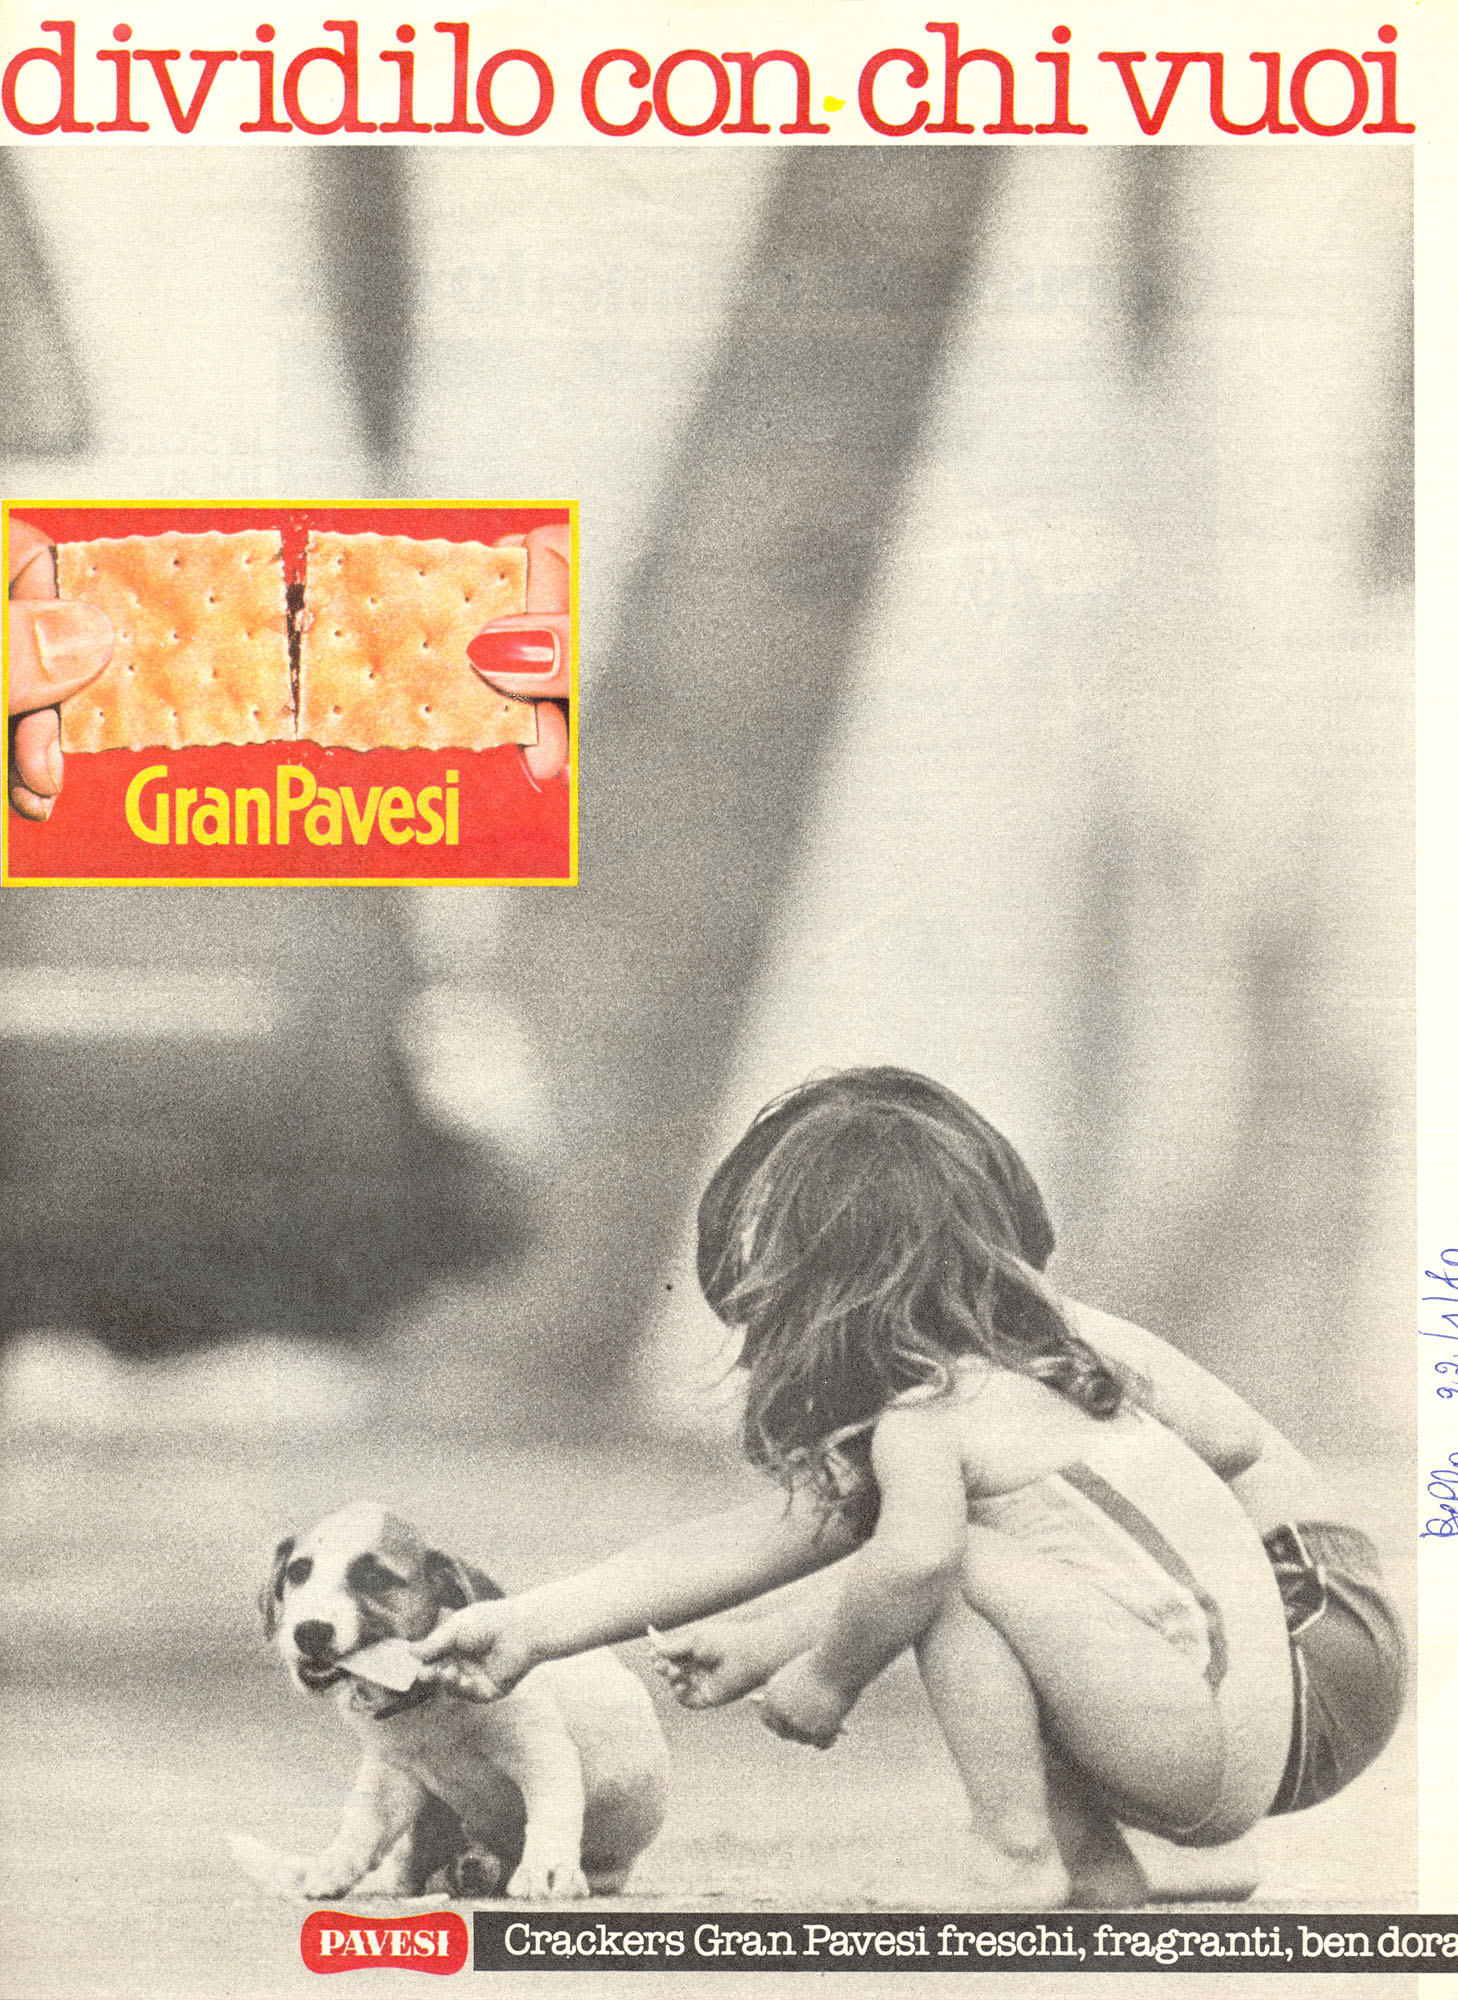 Press advertising Gran Pavesi Crackers, 1980